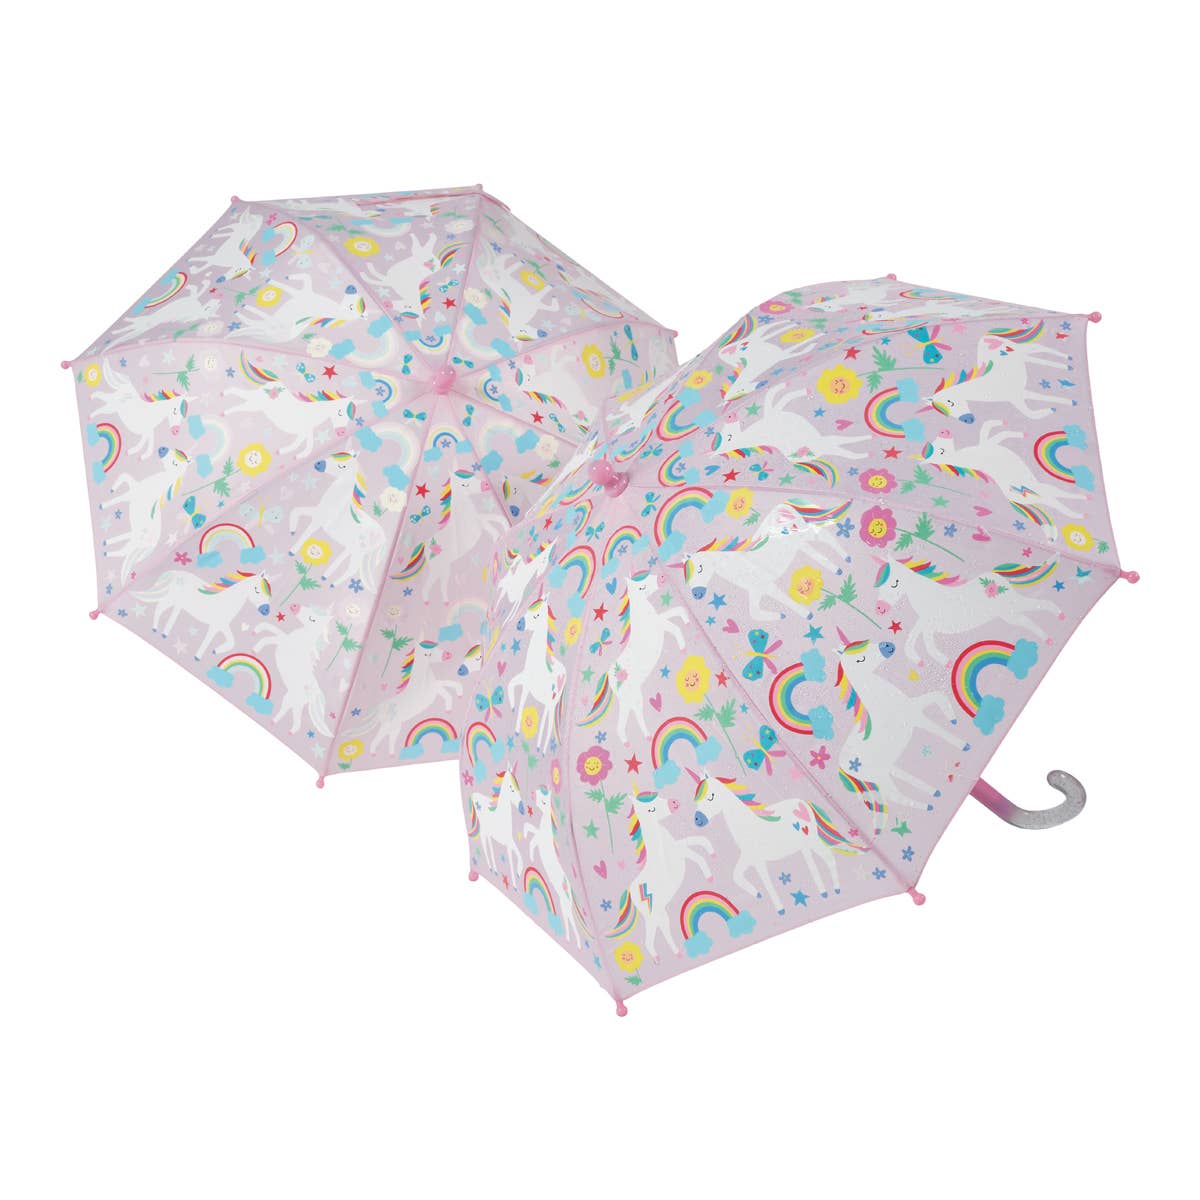 Color Changing Umbrella - Rainbow Unicorn